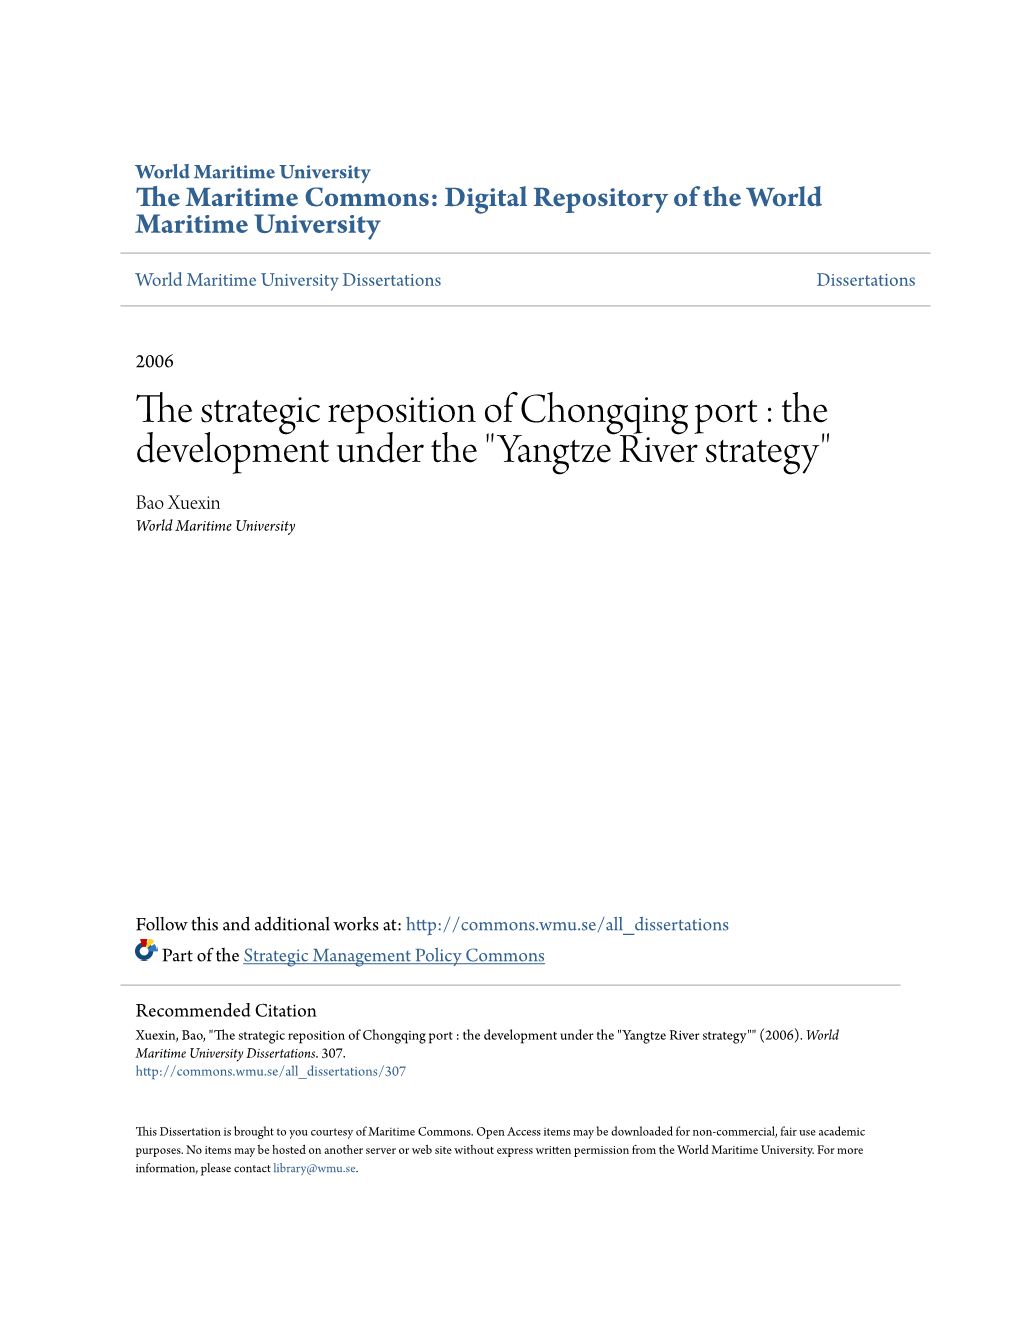 The Strategic Reposition of Chongqing Port : the Development Under